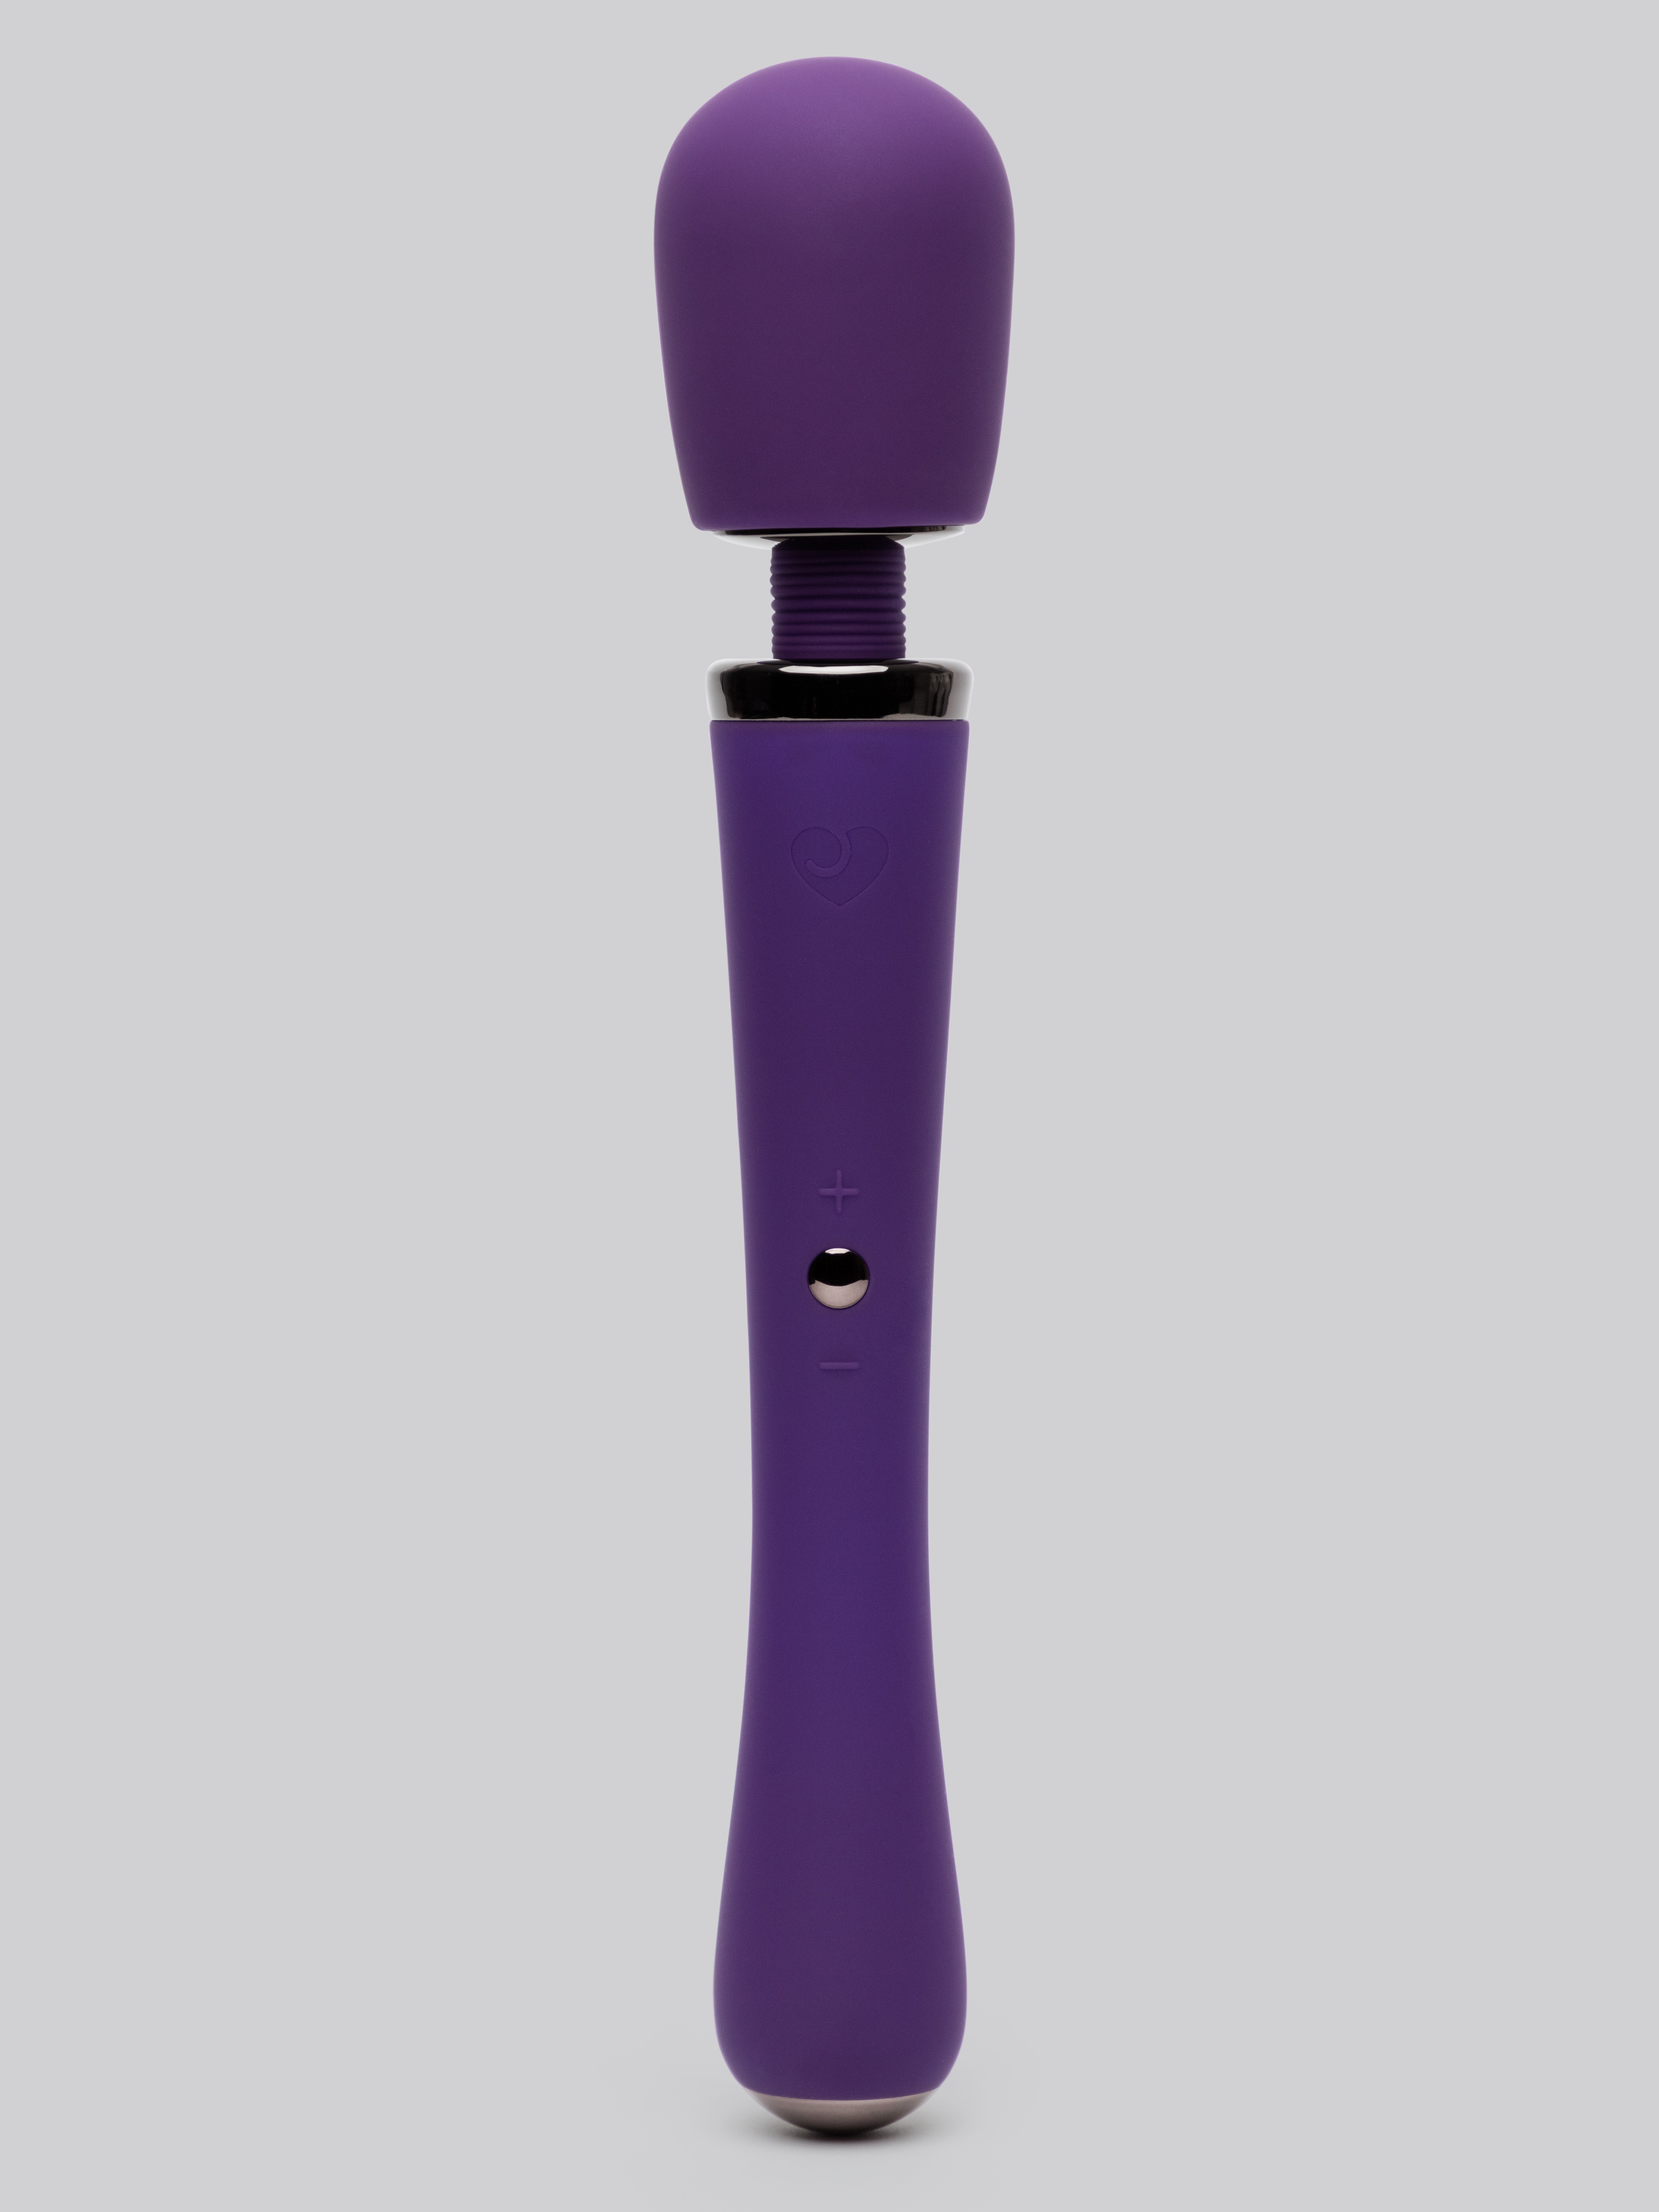 Lovehoney Desire Luxury Rechargeable Wand Vibrator - Purple